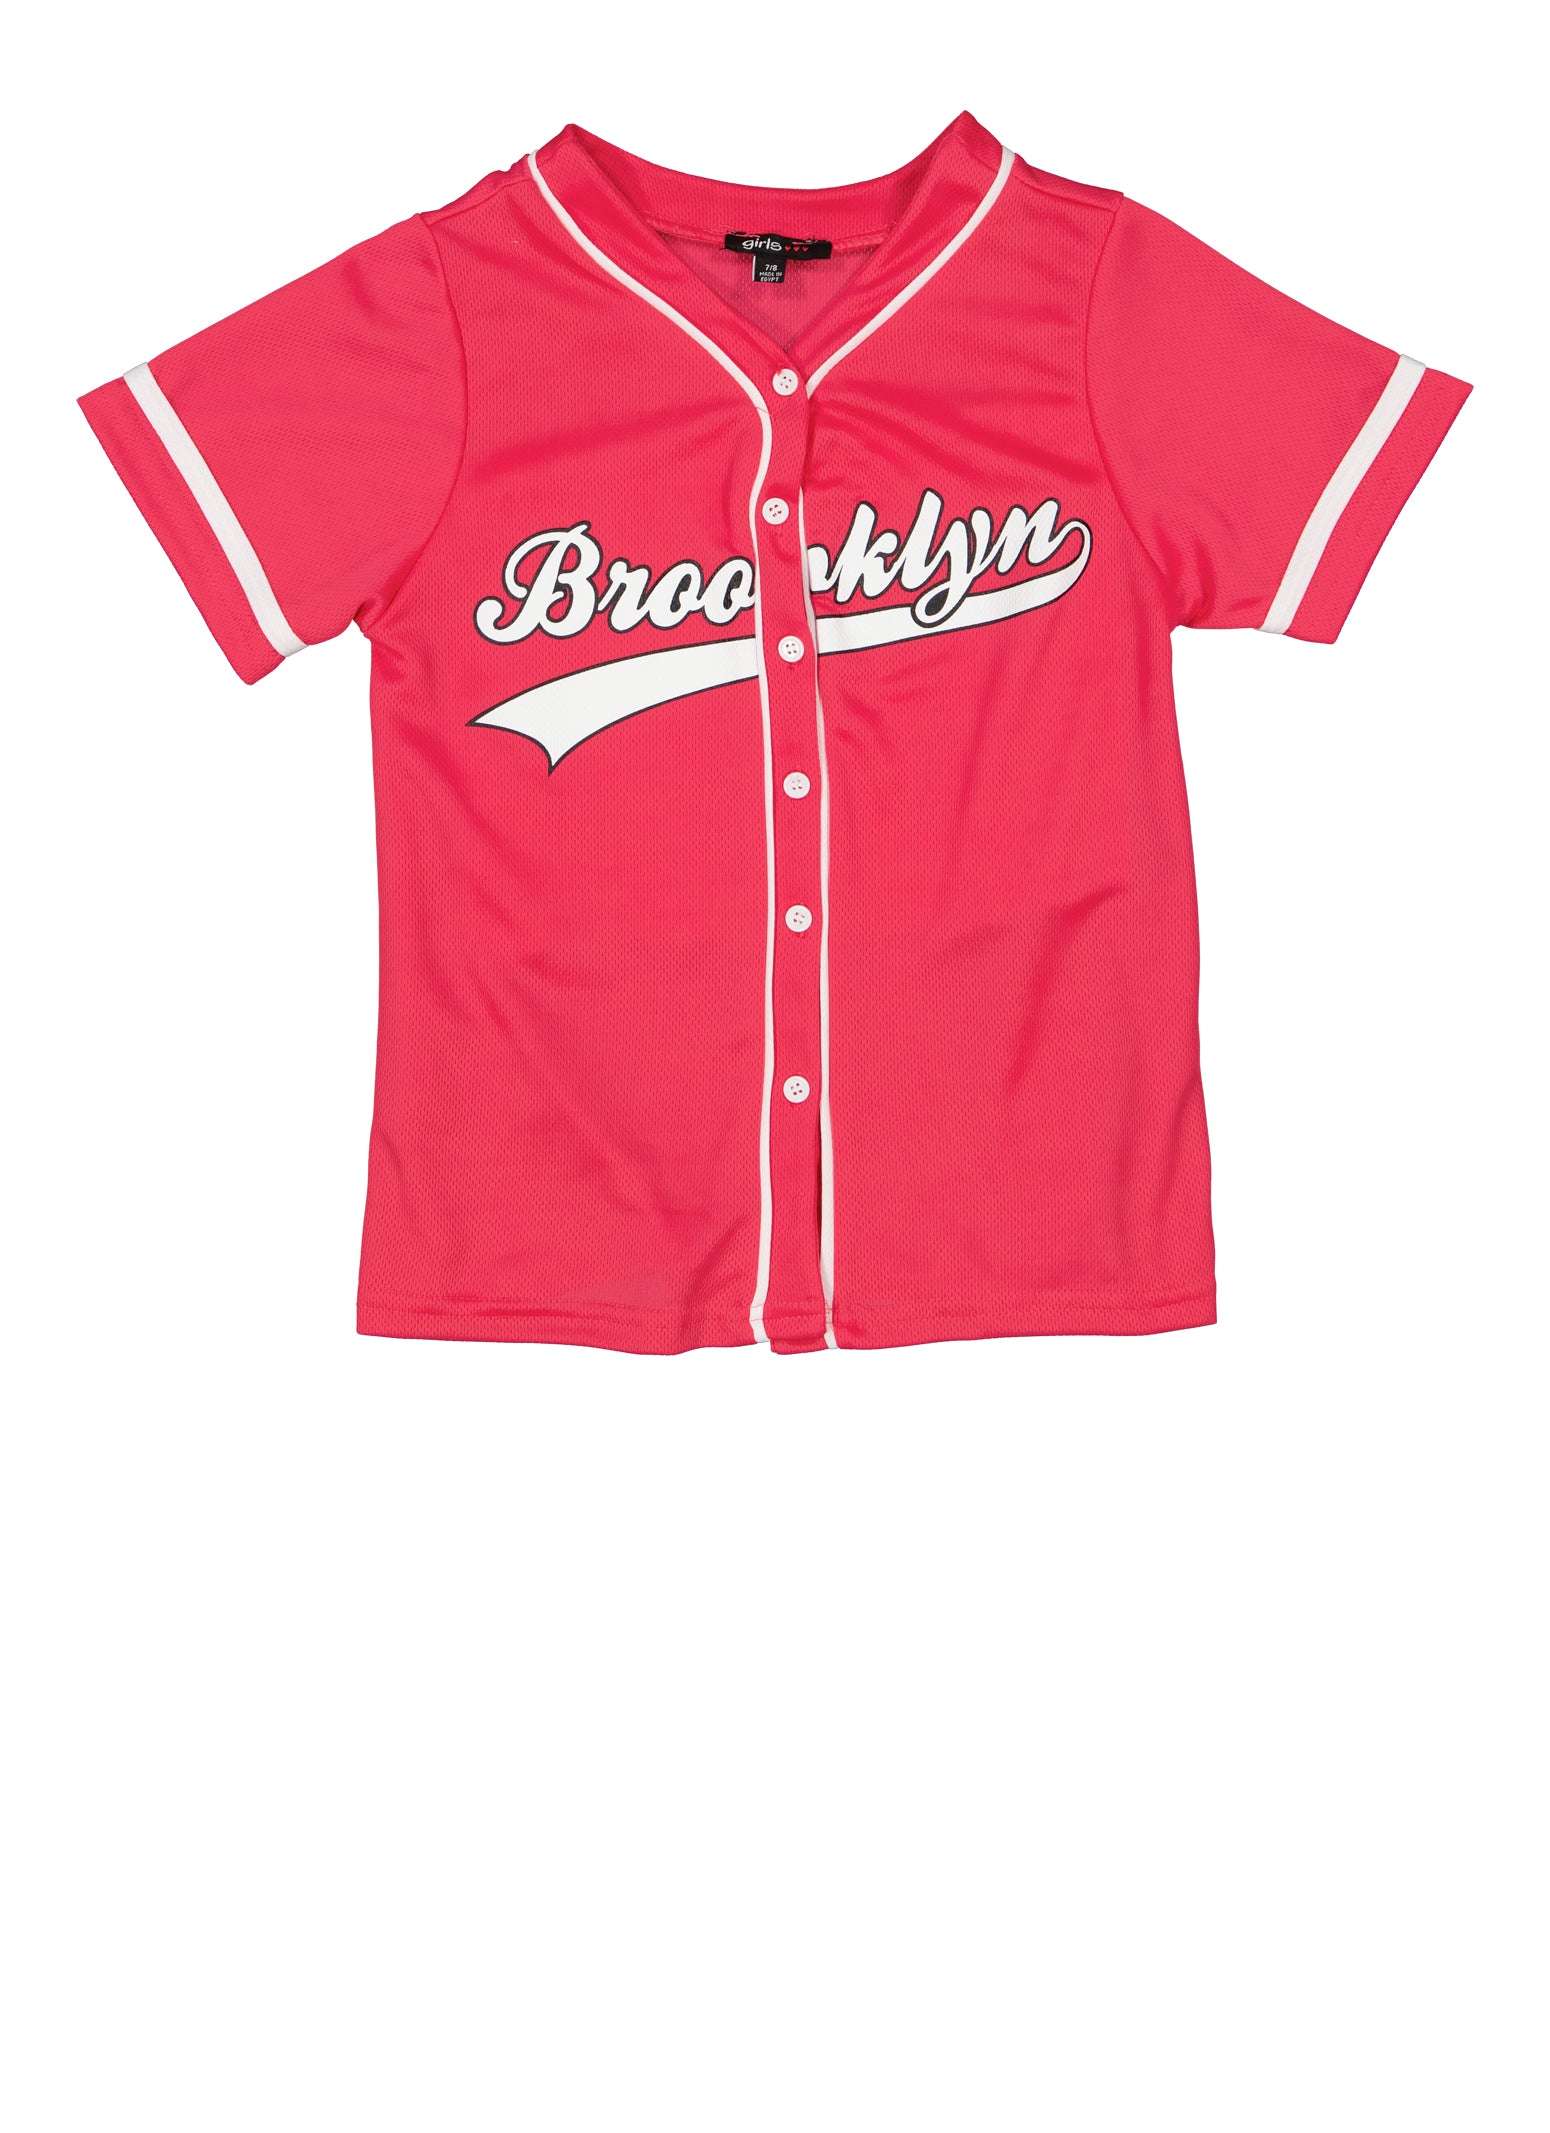 brooklyn baseball jersey